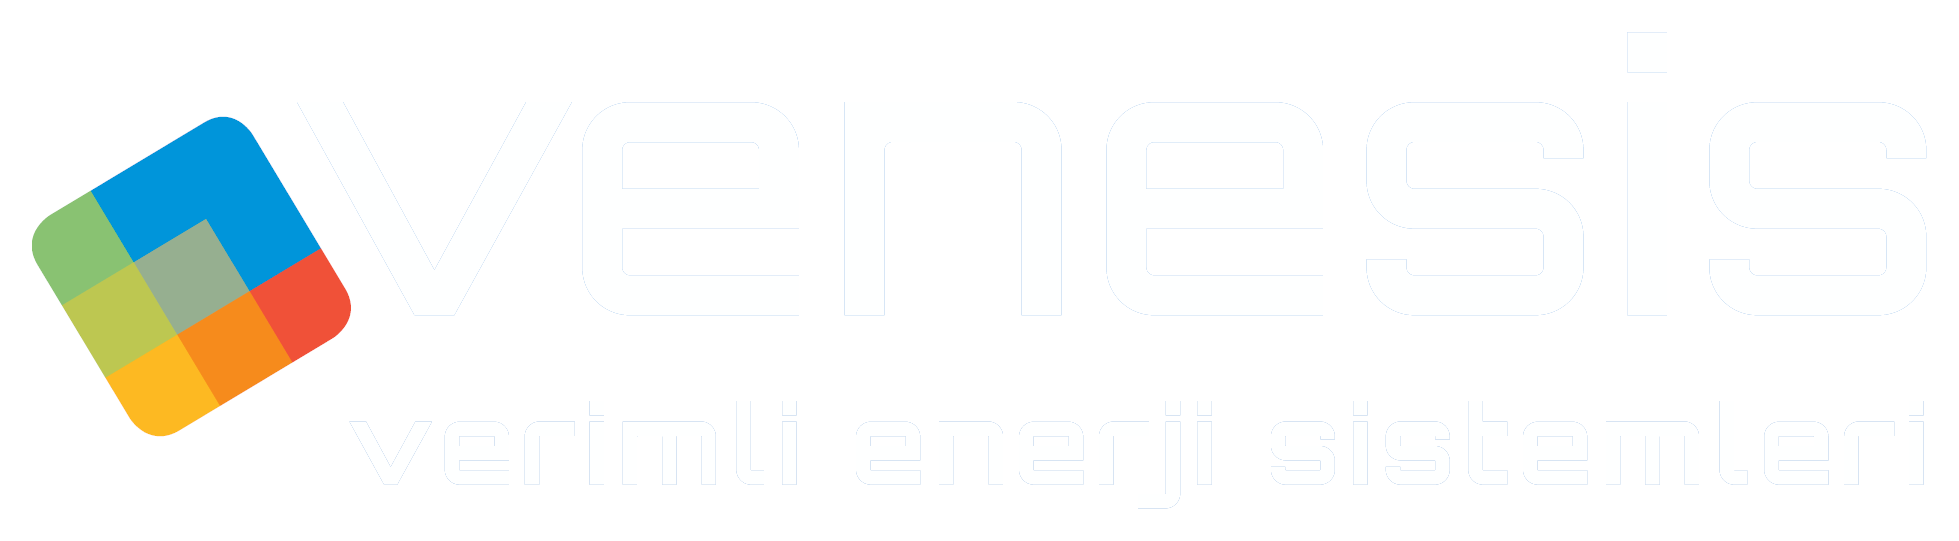 Venesis silhouette logo